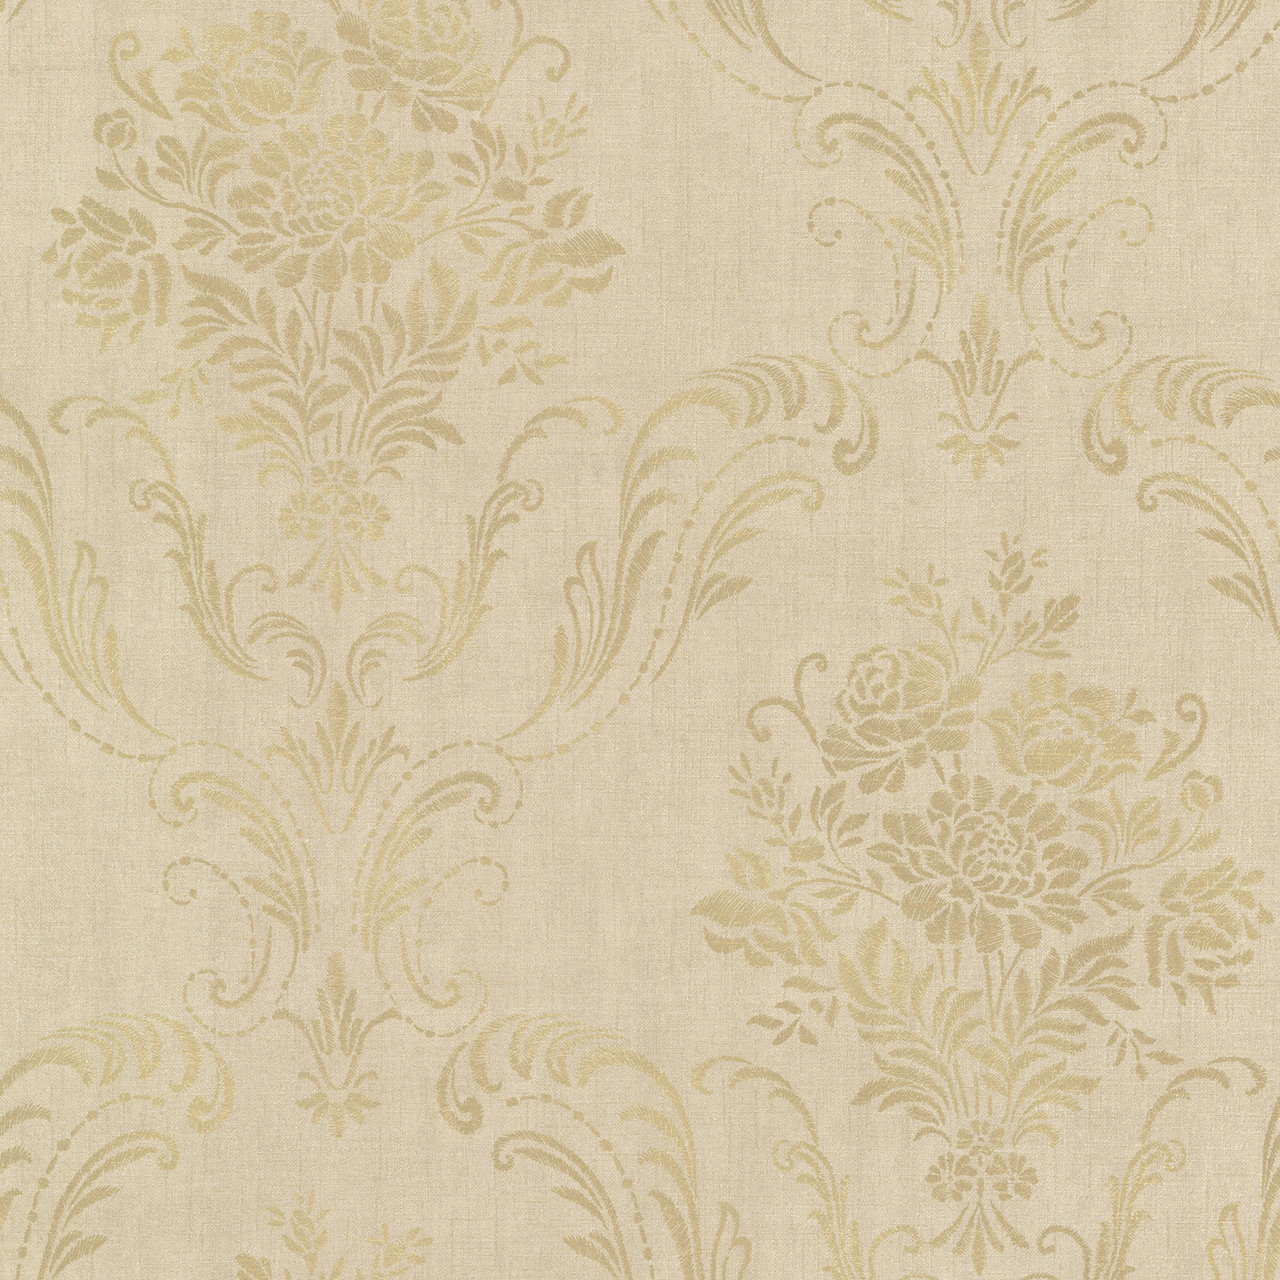 Brewster Avalon Manor Gold Floral Damask Wallpaper